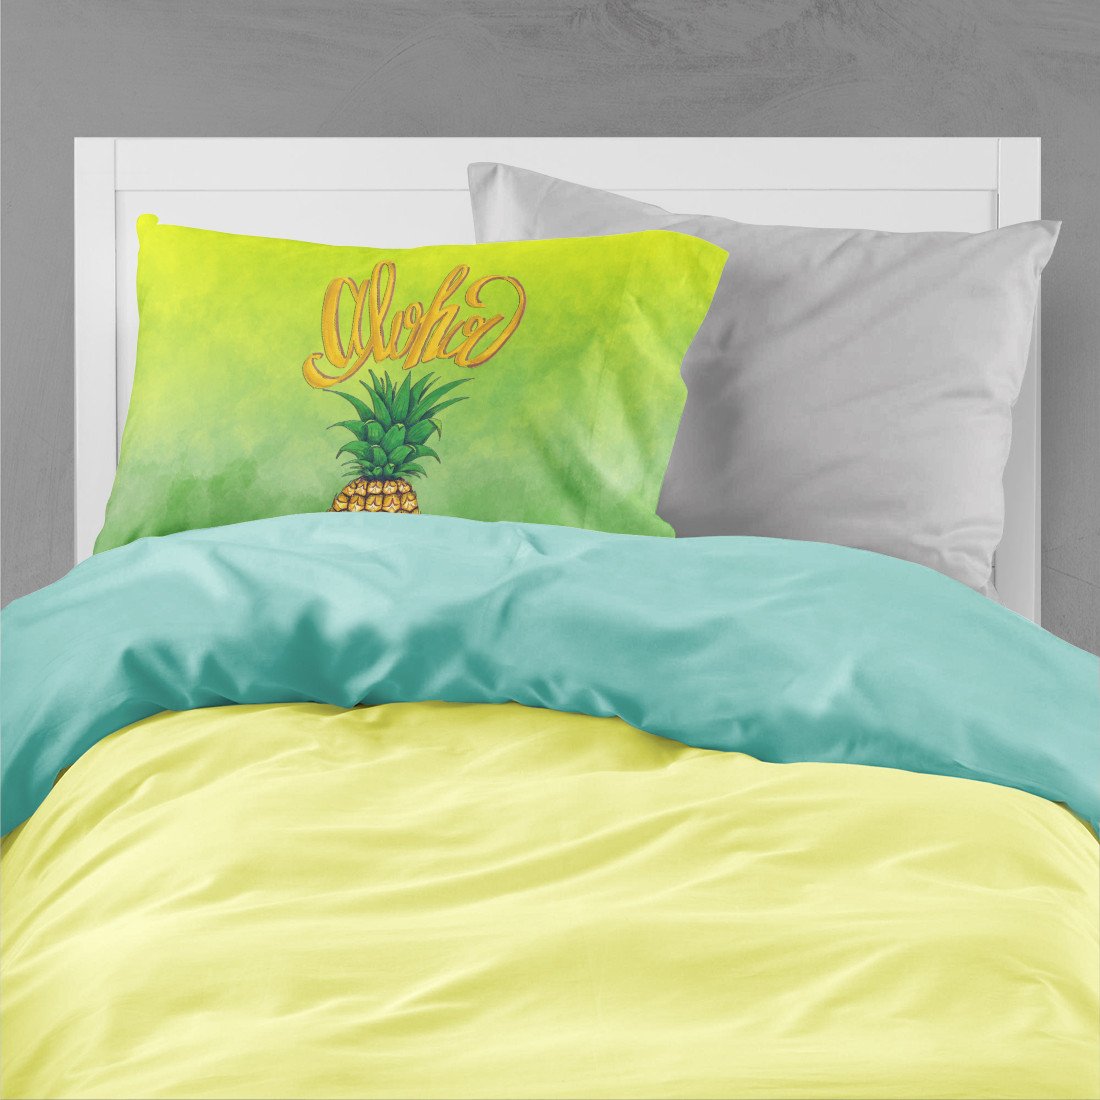 Aloha Pineapple Welcome Fabric Standard Pillowcase BB7451PILLOWCASE by Caroline's Treasures